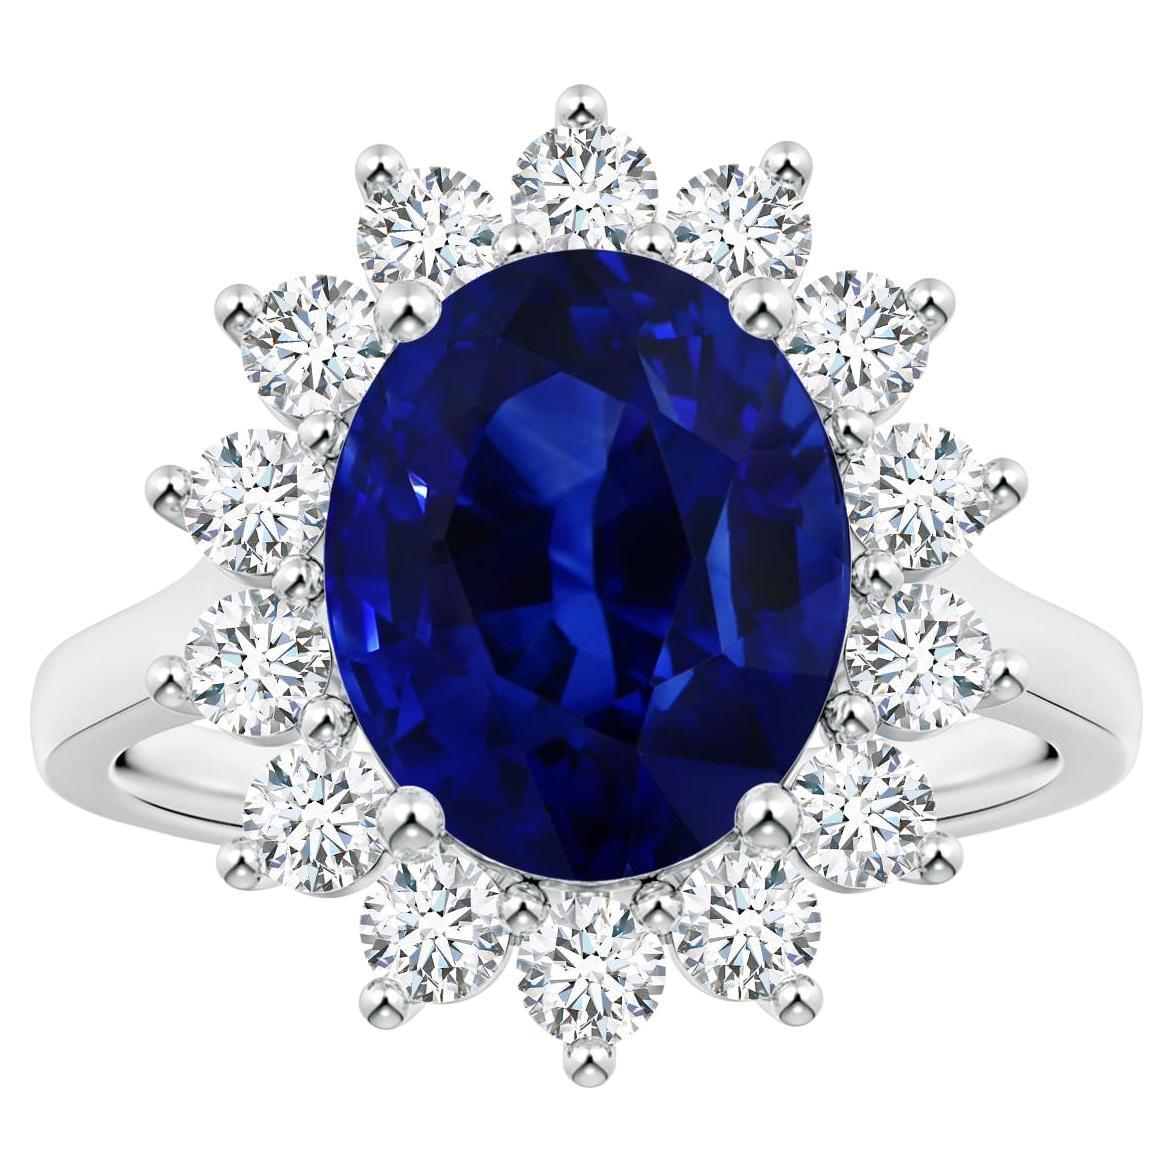 ANGARA Princess Diana Inspired GIA Certified Blue Sapphire Halo White Gold Ring